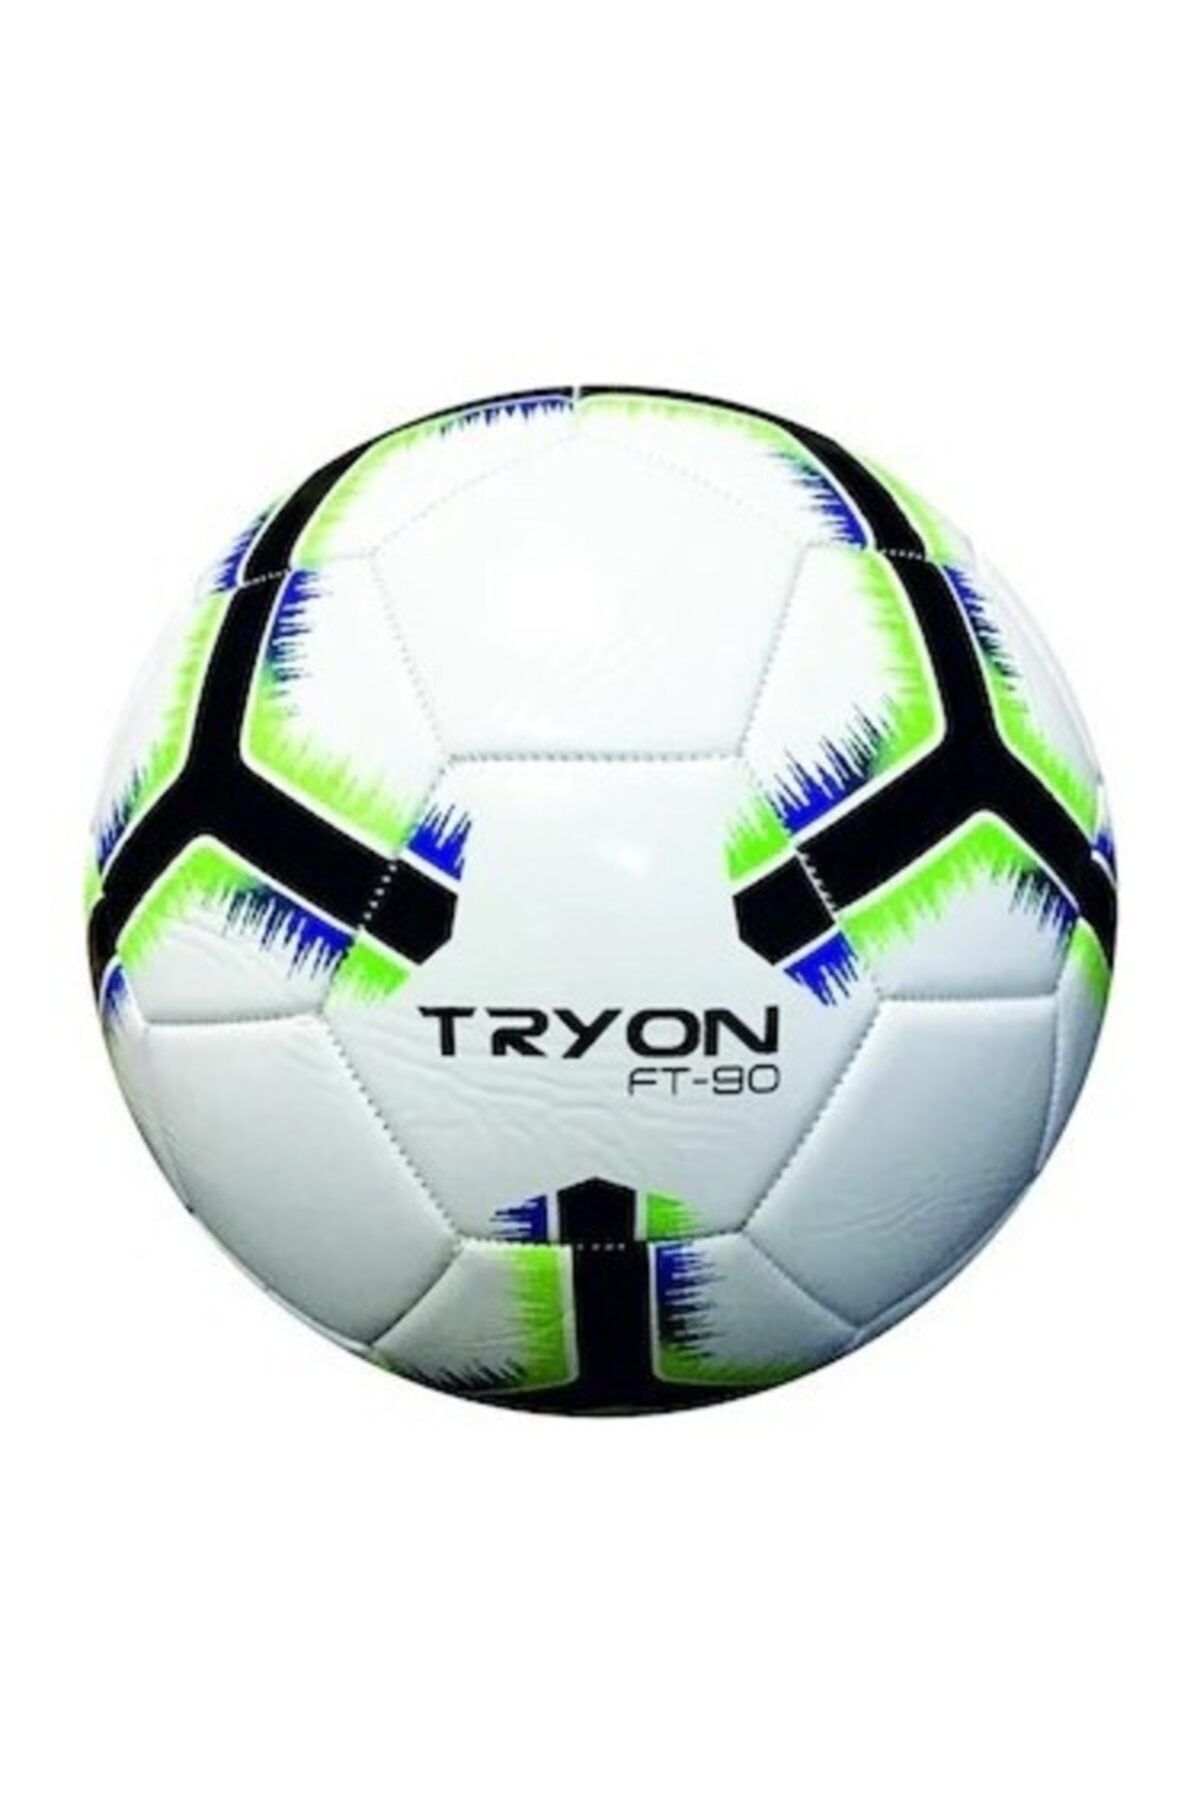 TRYON / Futbol Topu Ft-90 5 No